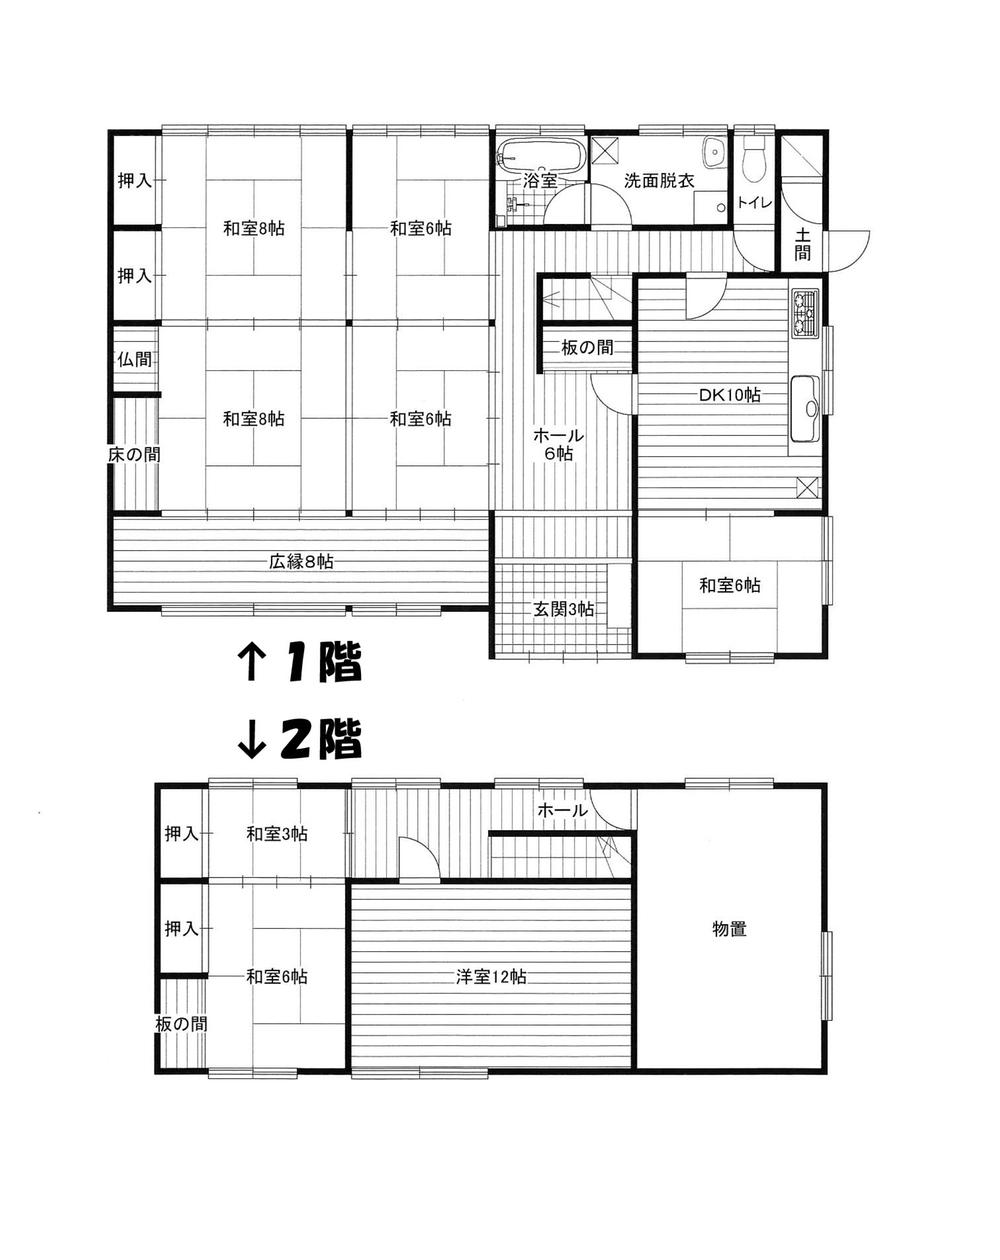 Floor plan. 21.6 million yen, 8DK + S (storeroom), Land area 331.88 sq m , Building area 202.2 sq m